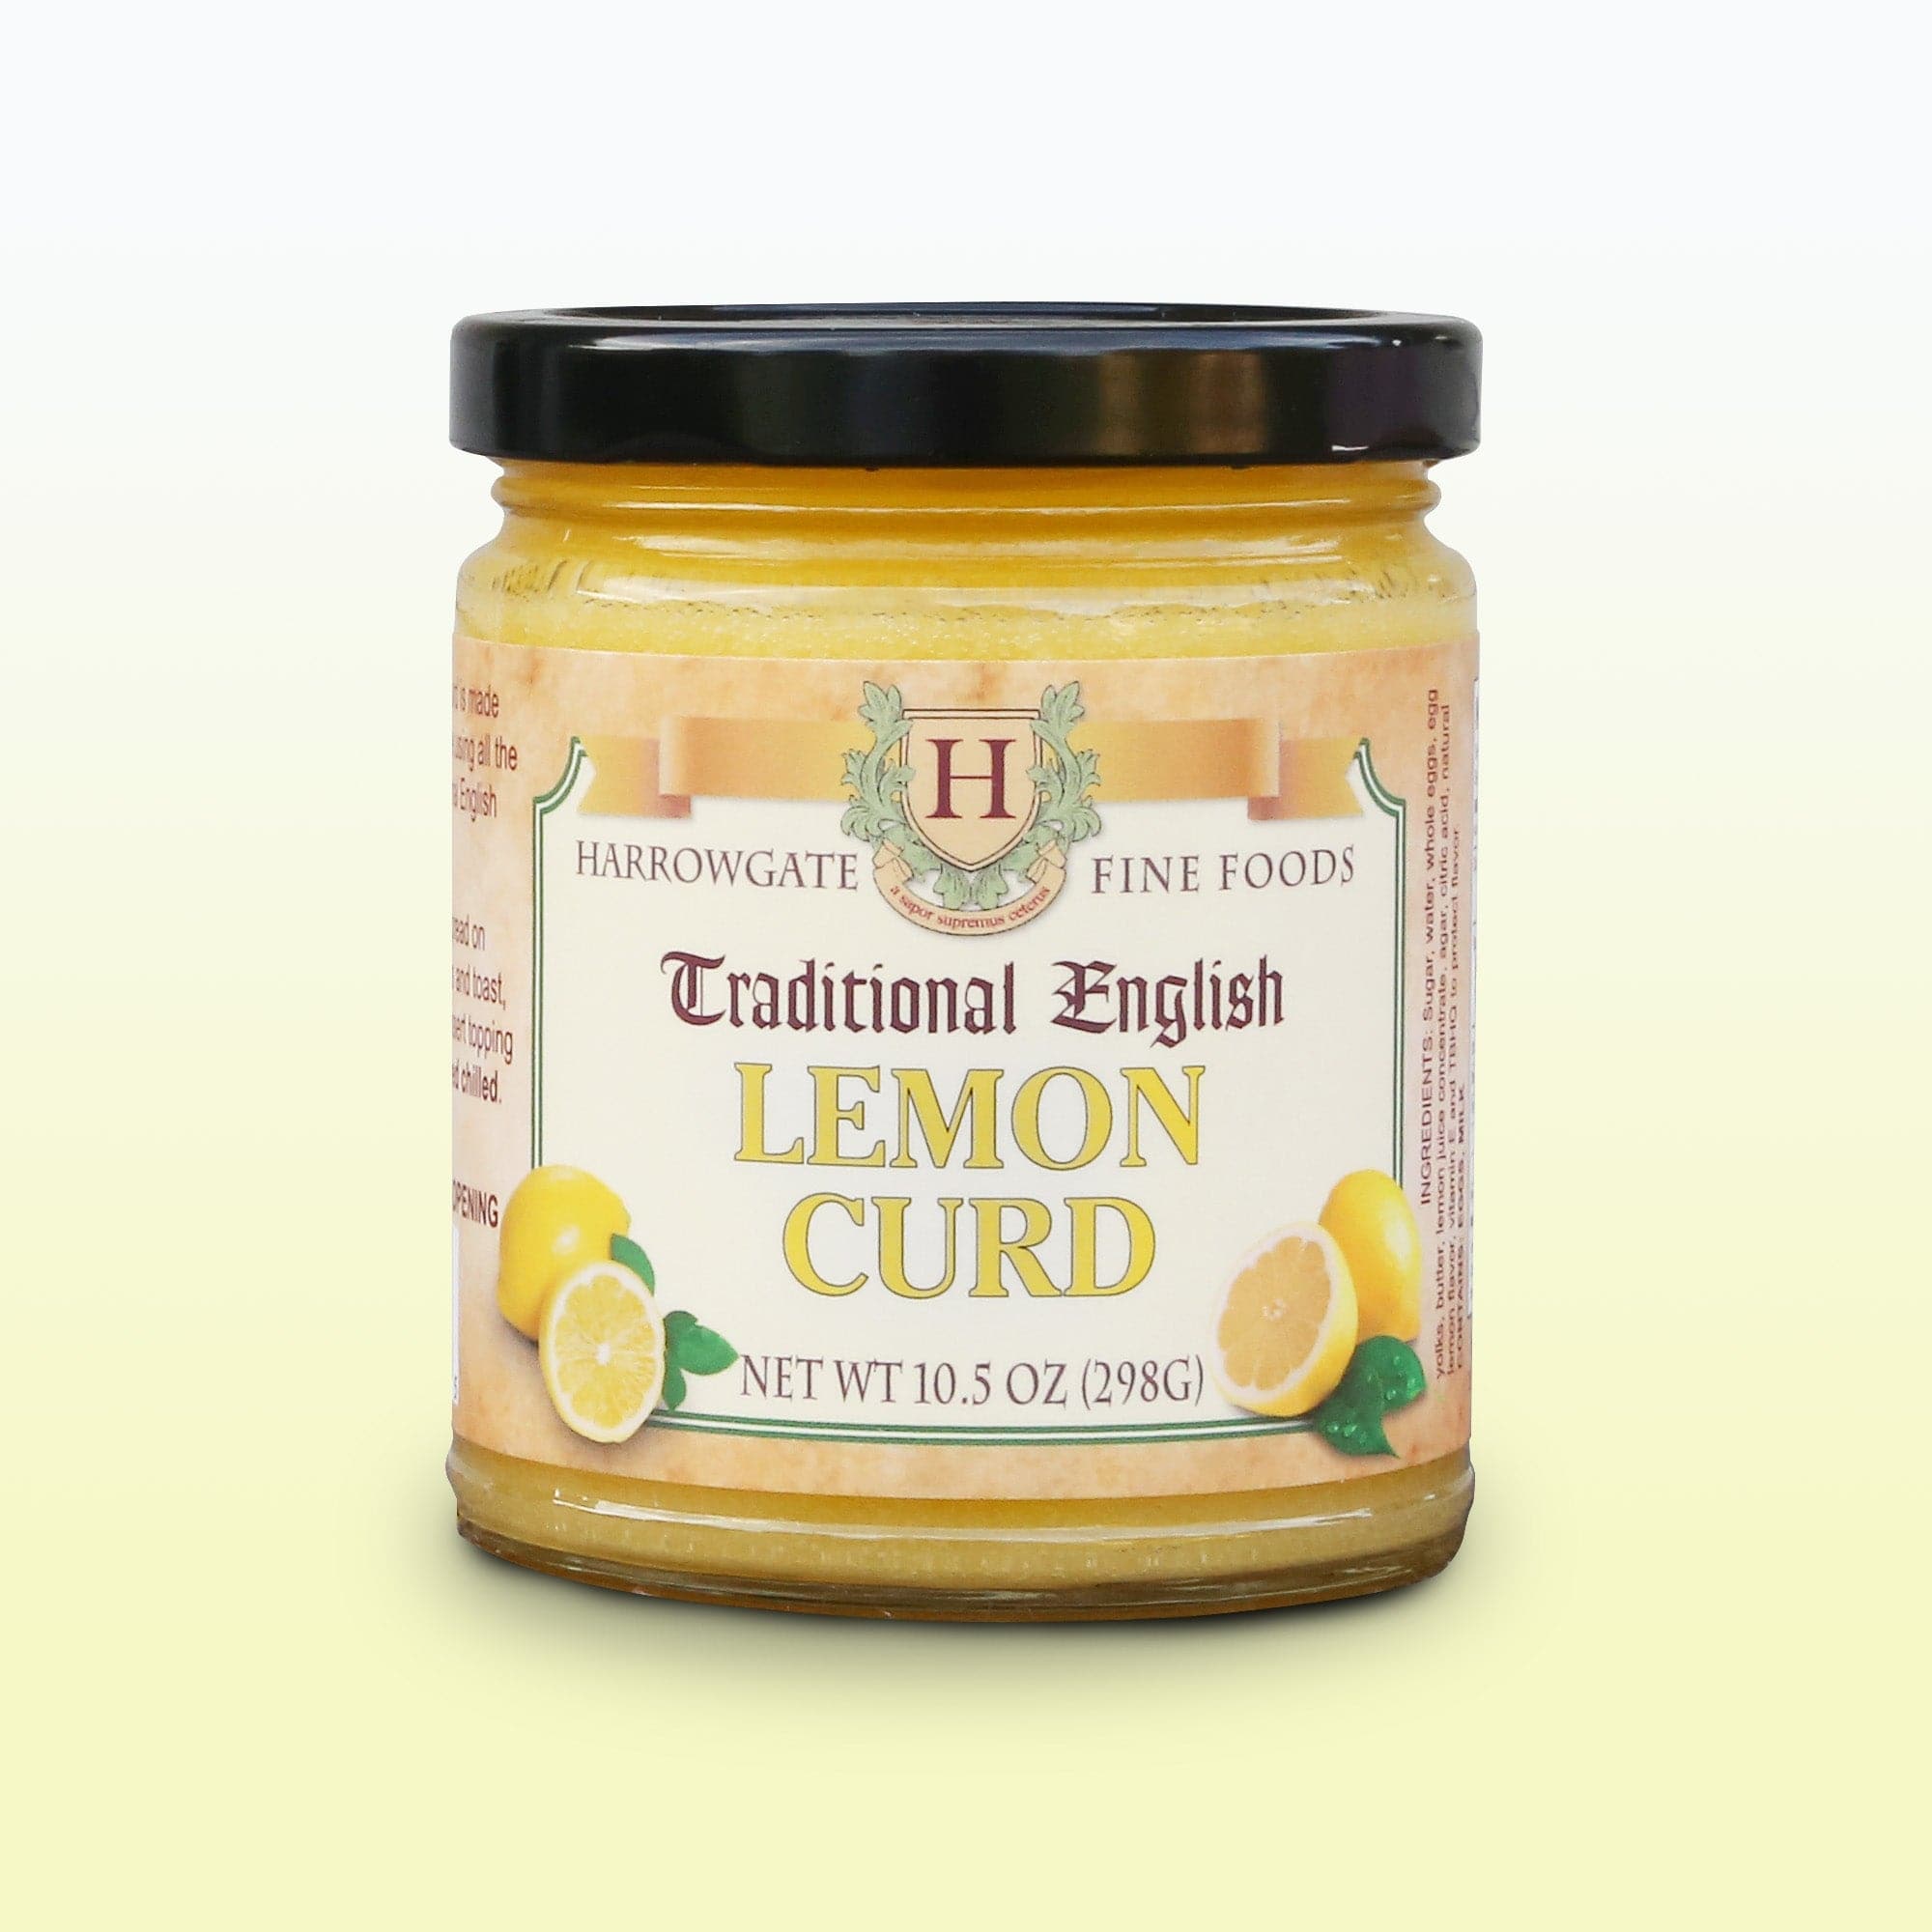 Harrowgate Traditional English Lemon Curd